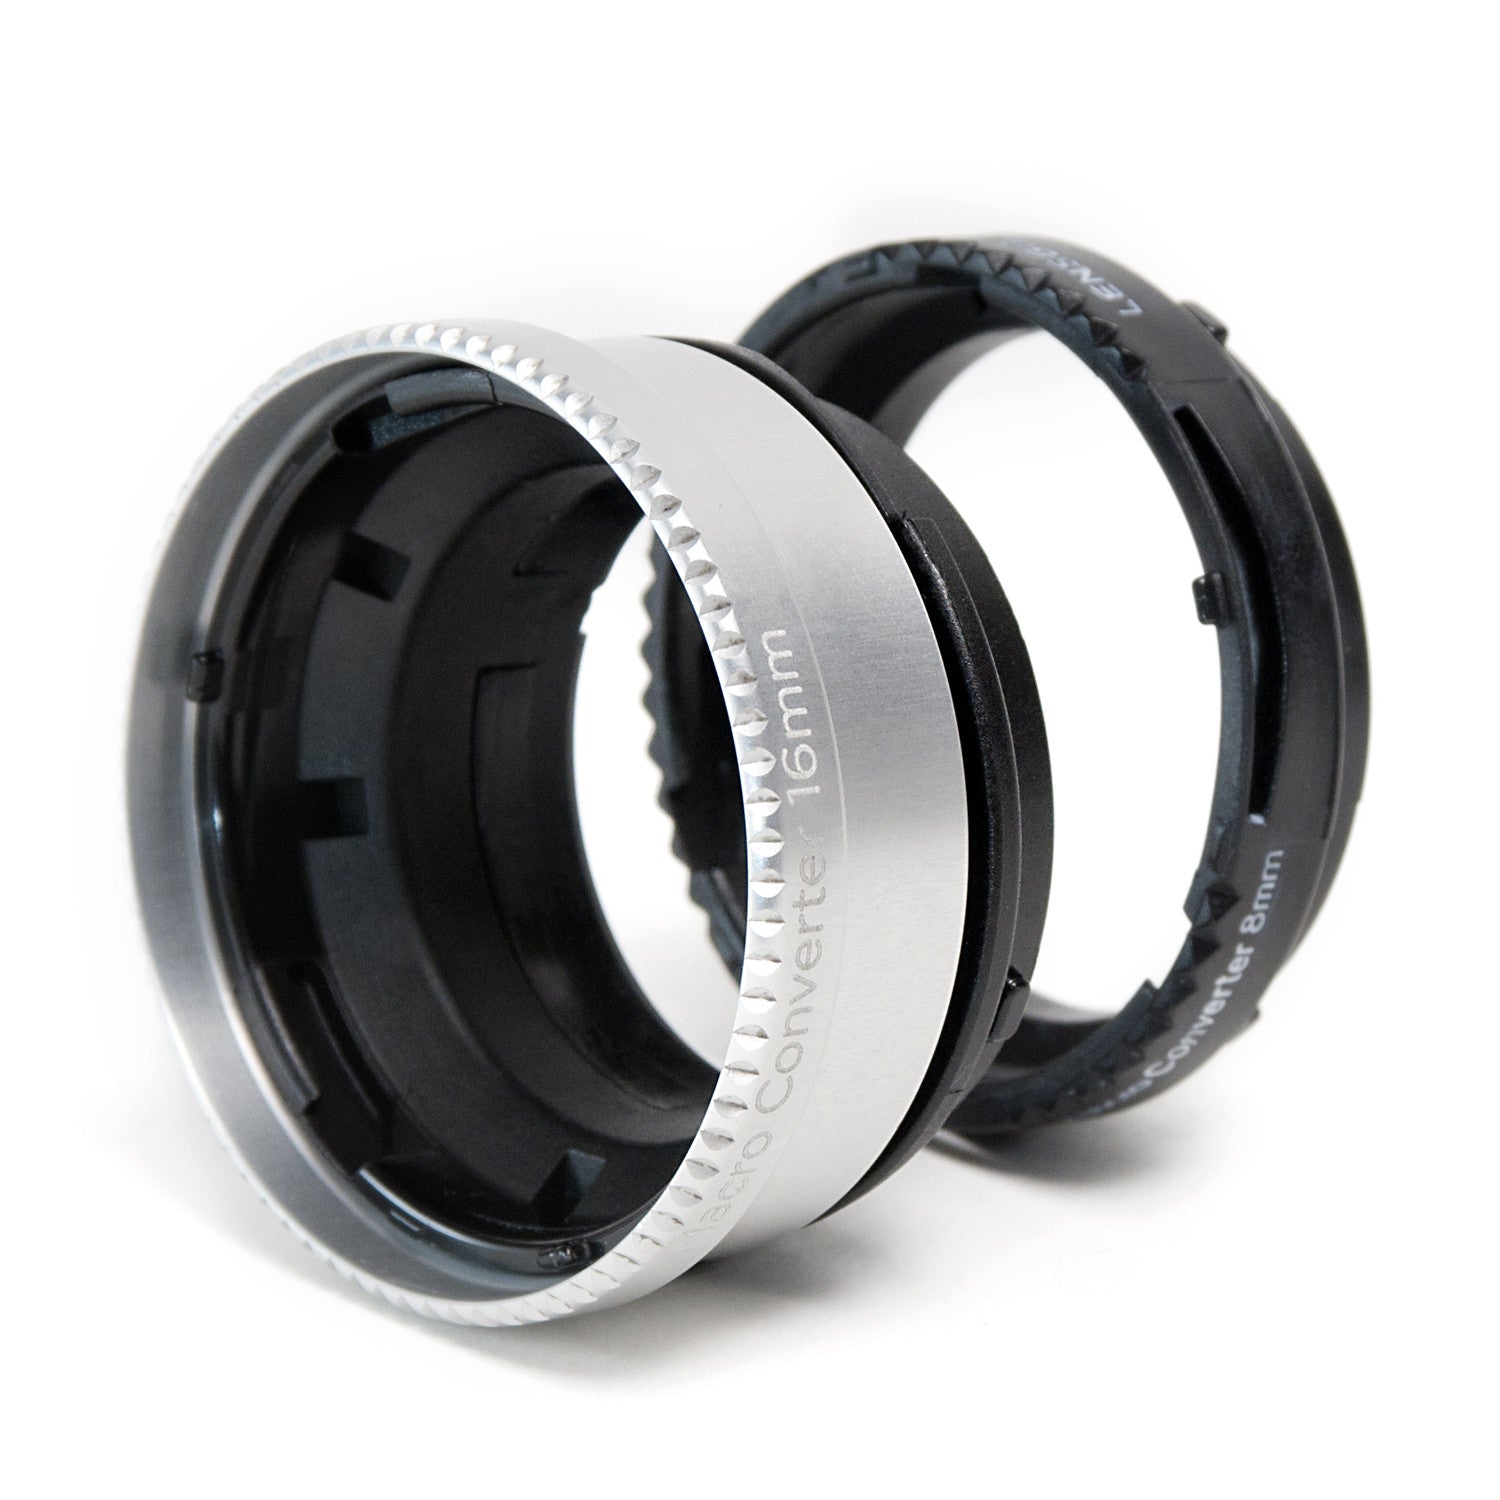 Lensbaby Macro Converters, lenses optics & accessories, Lensbabies - Pictureline 